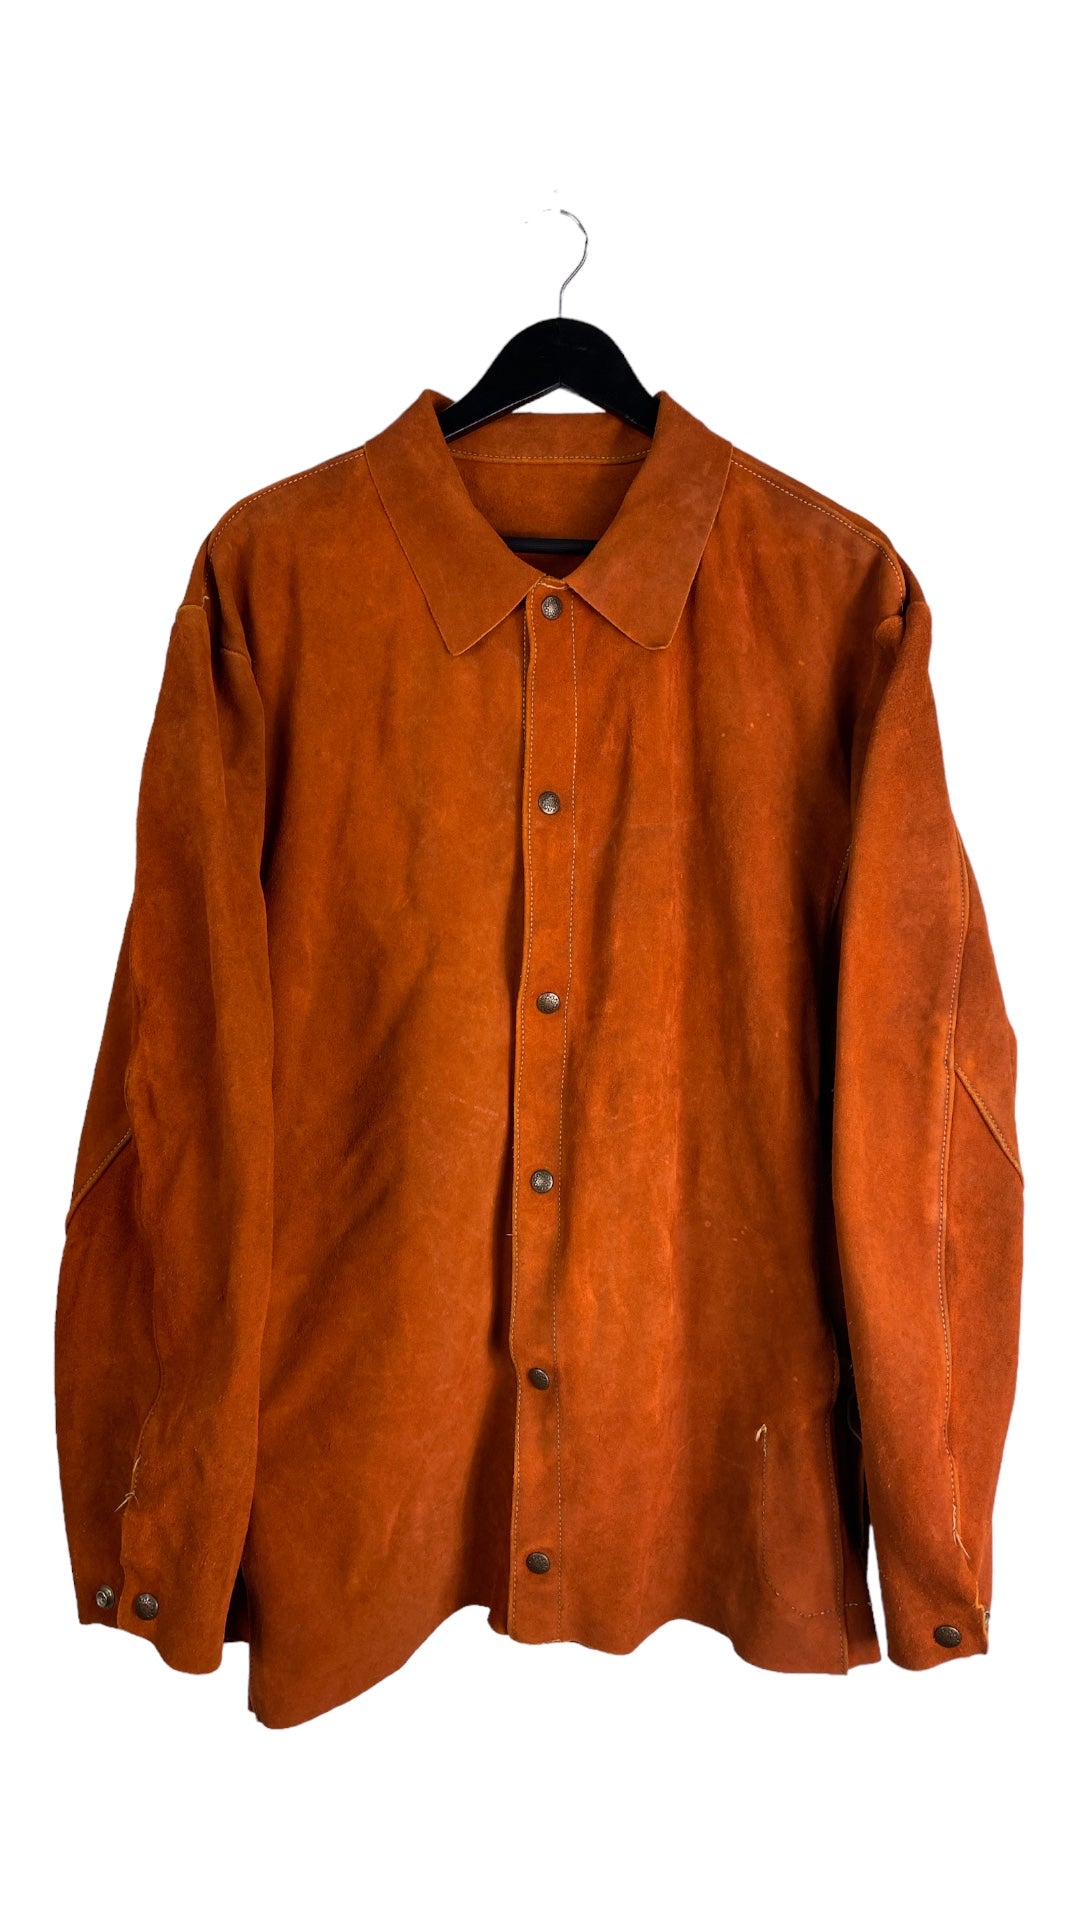 VTG Western Suede Leather Button Up Jacket Sz L